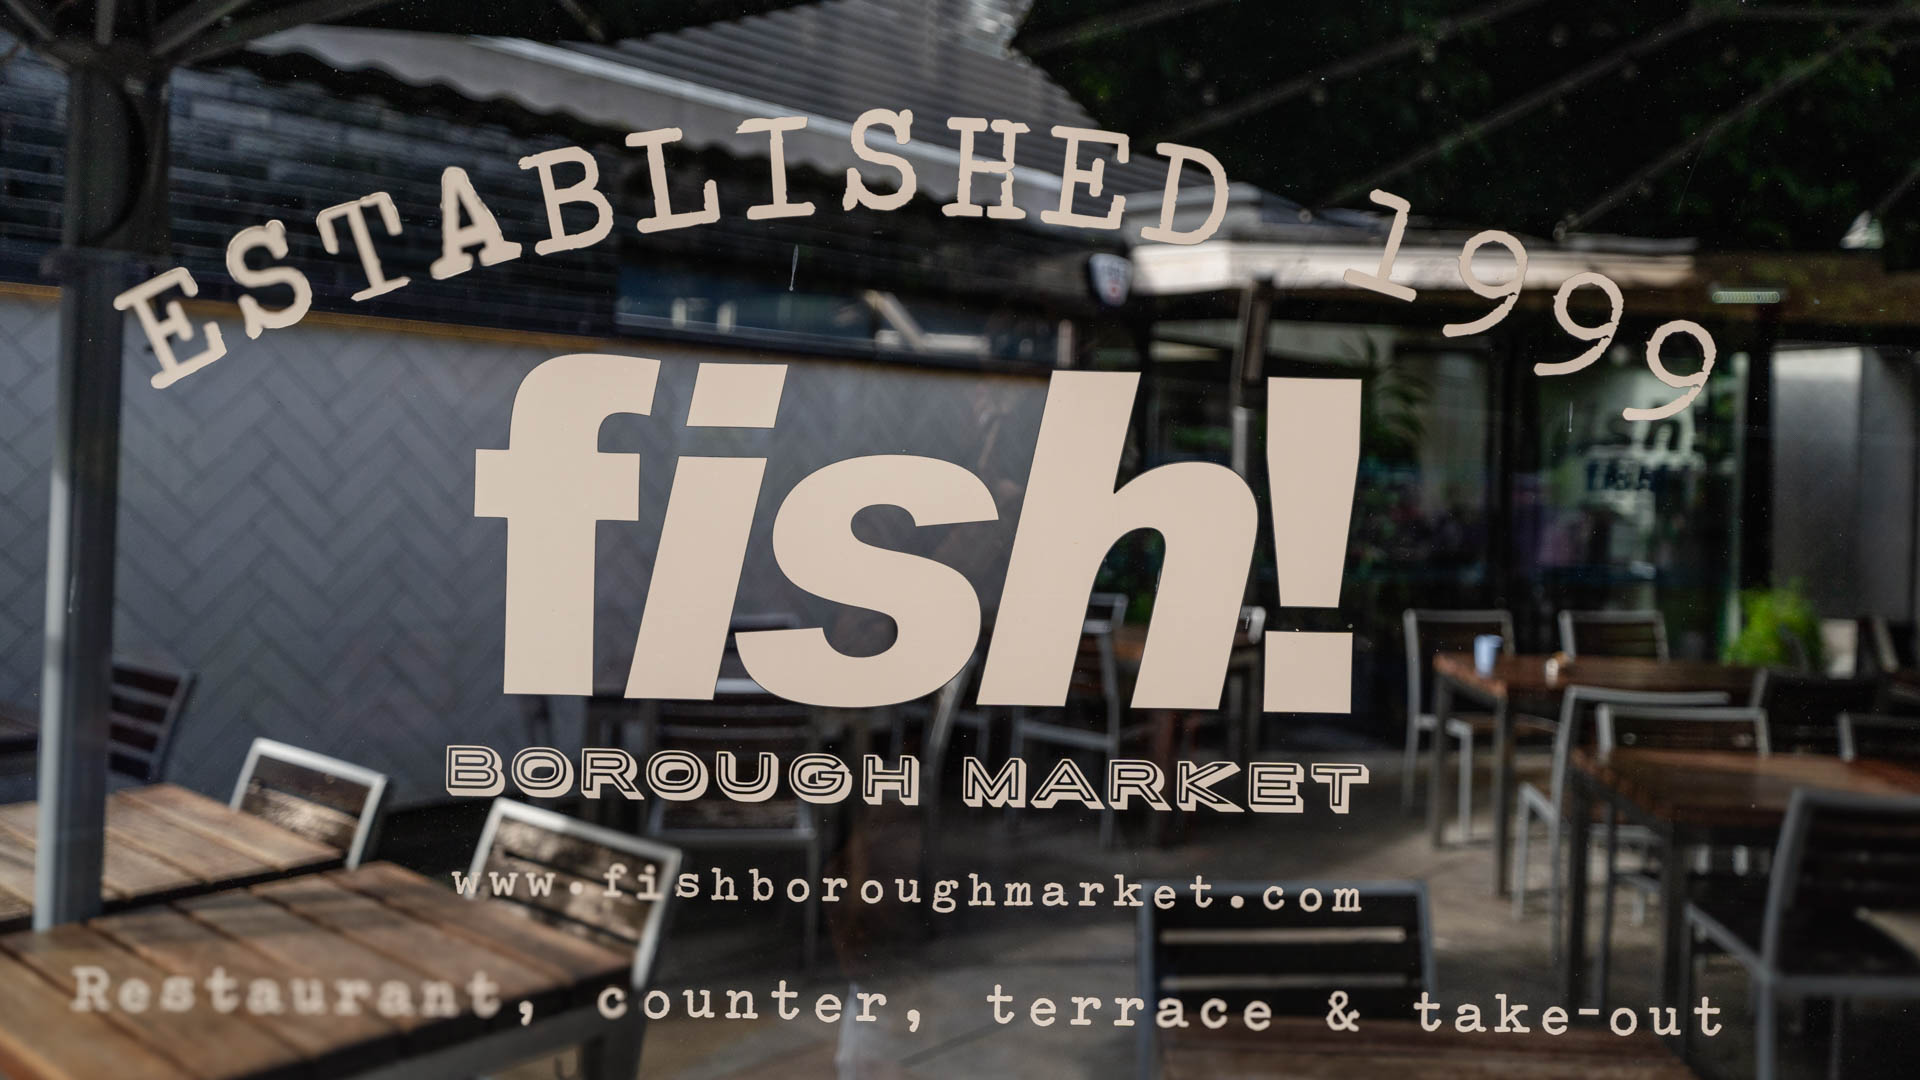 Fish-Borough Market